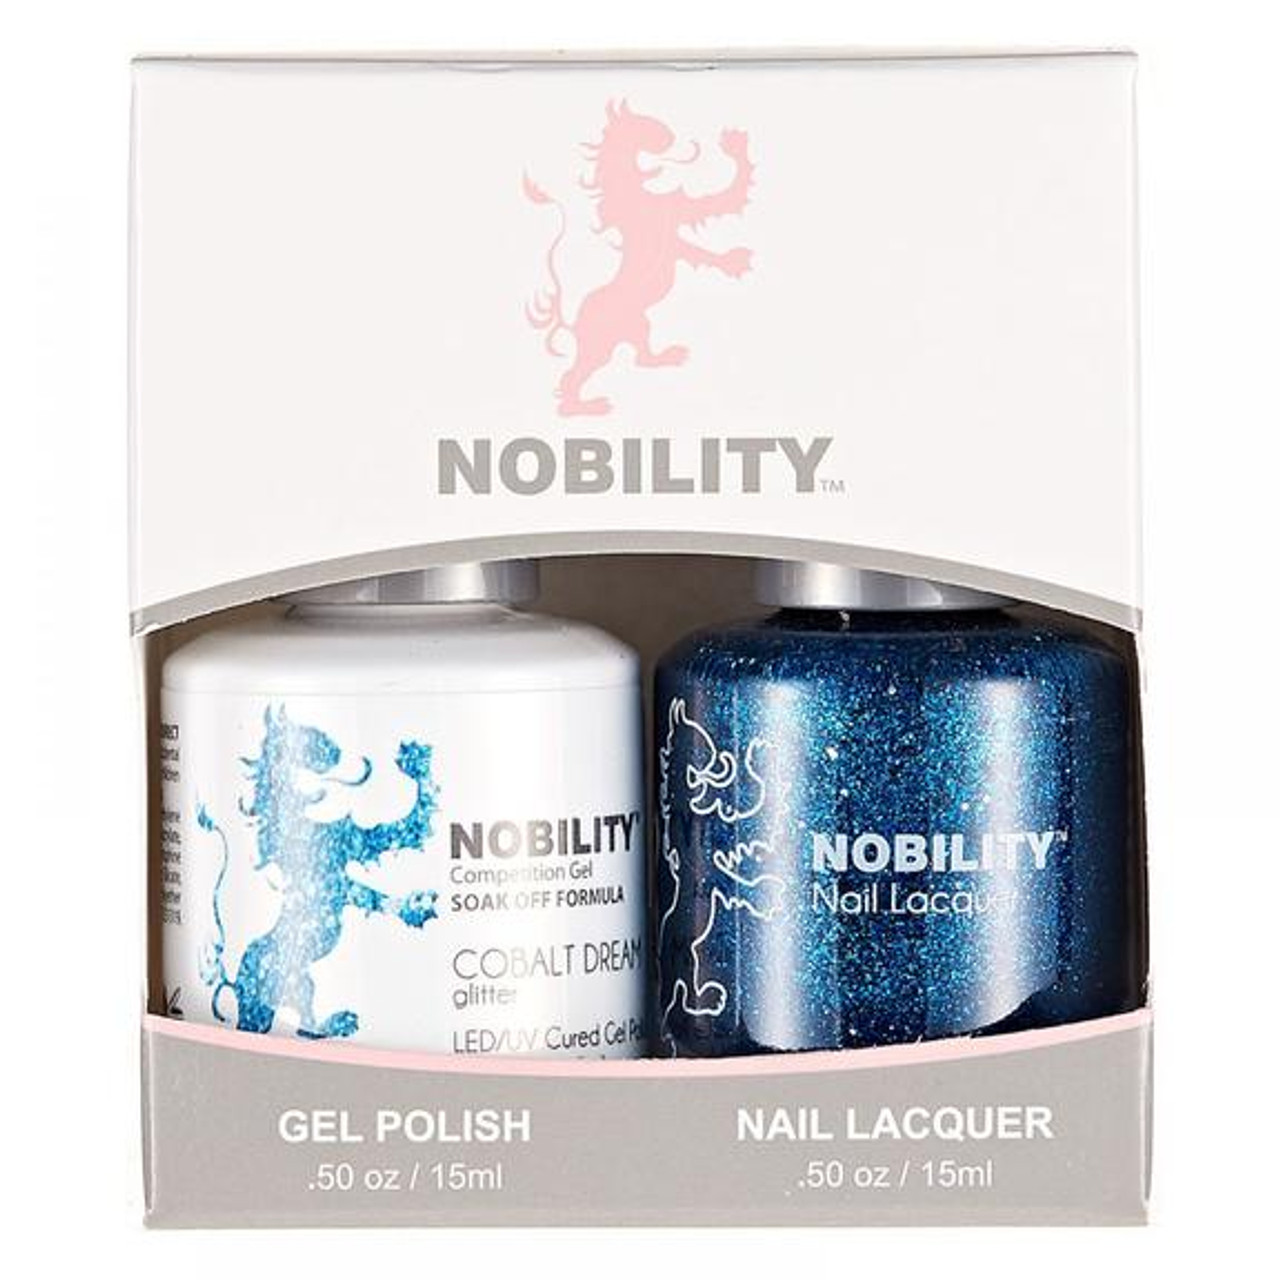 LeChat Nobility Gel Polish & Nail Lacquer Duo Set Cobalt Dream - .5 oz / 15 ml